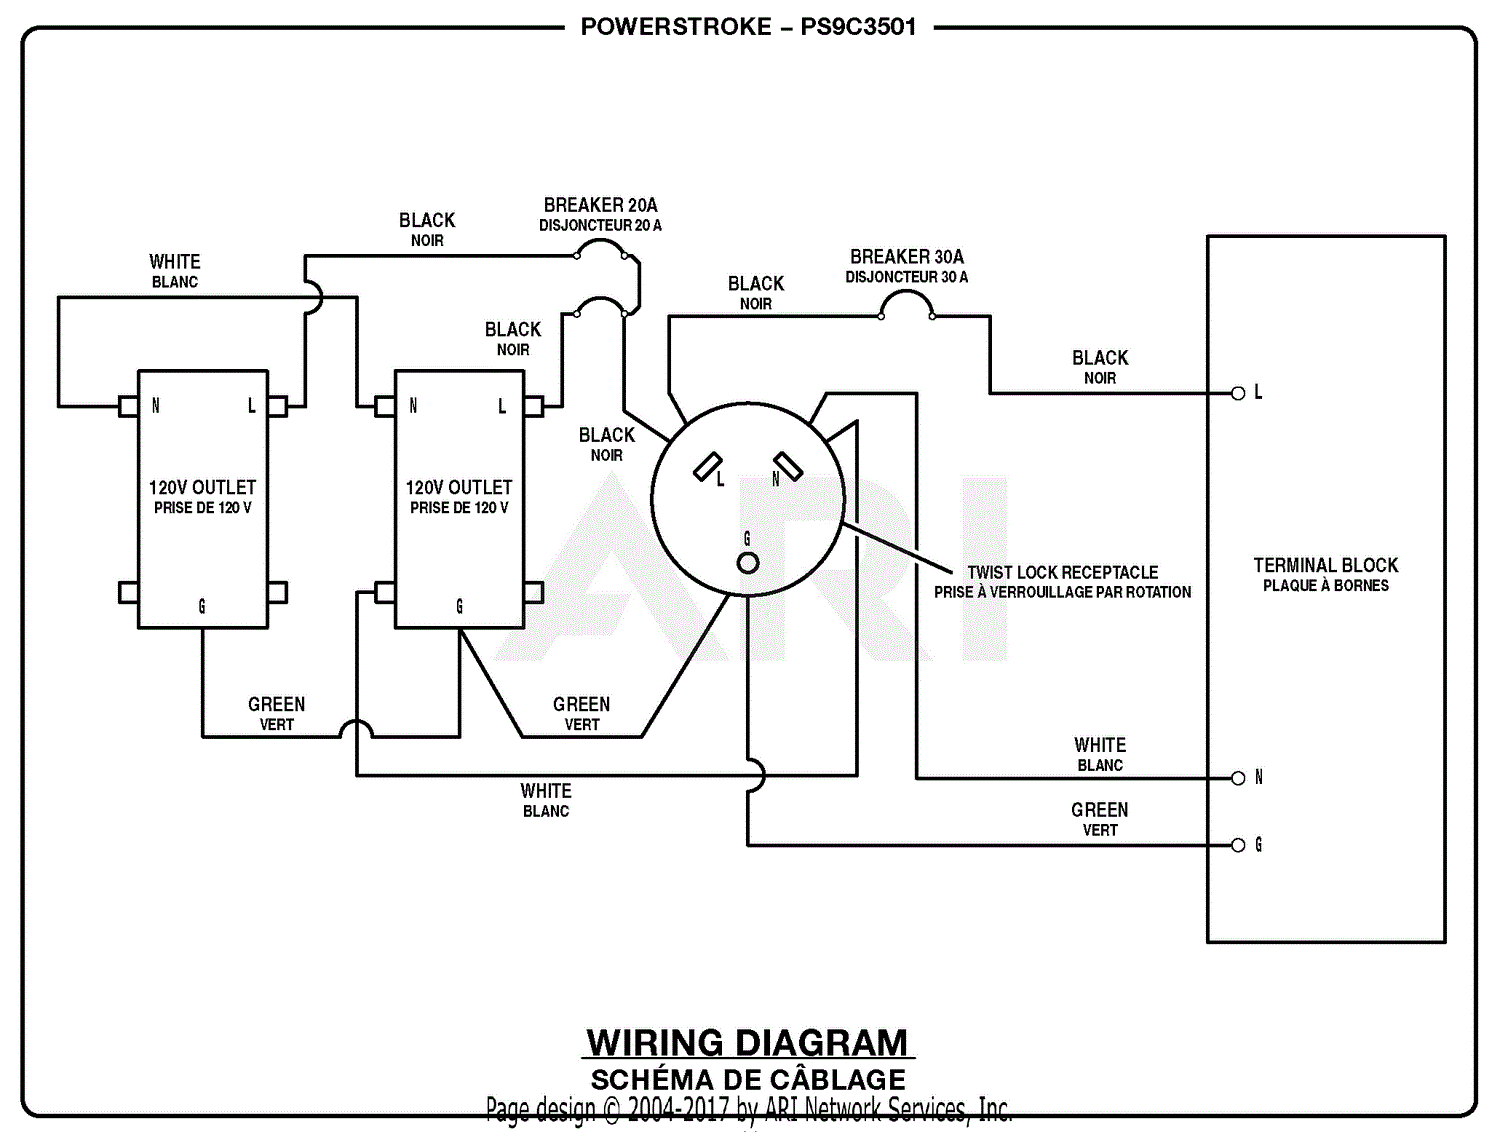 American Standard Thermostat G1675 Wiring Diagram - Wiring.